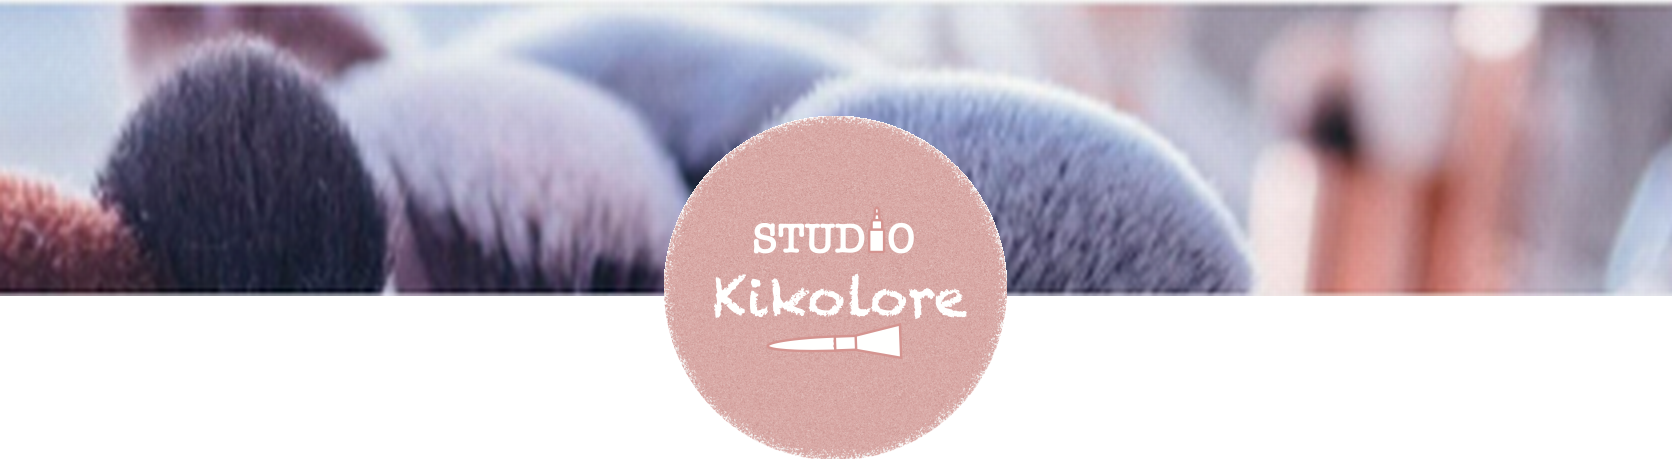 Studio Kikolore - visagie, grime, workshops & advies